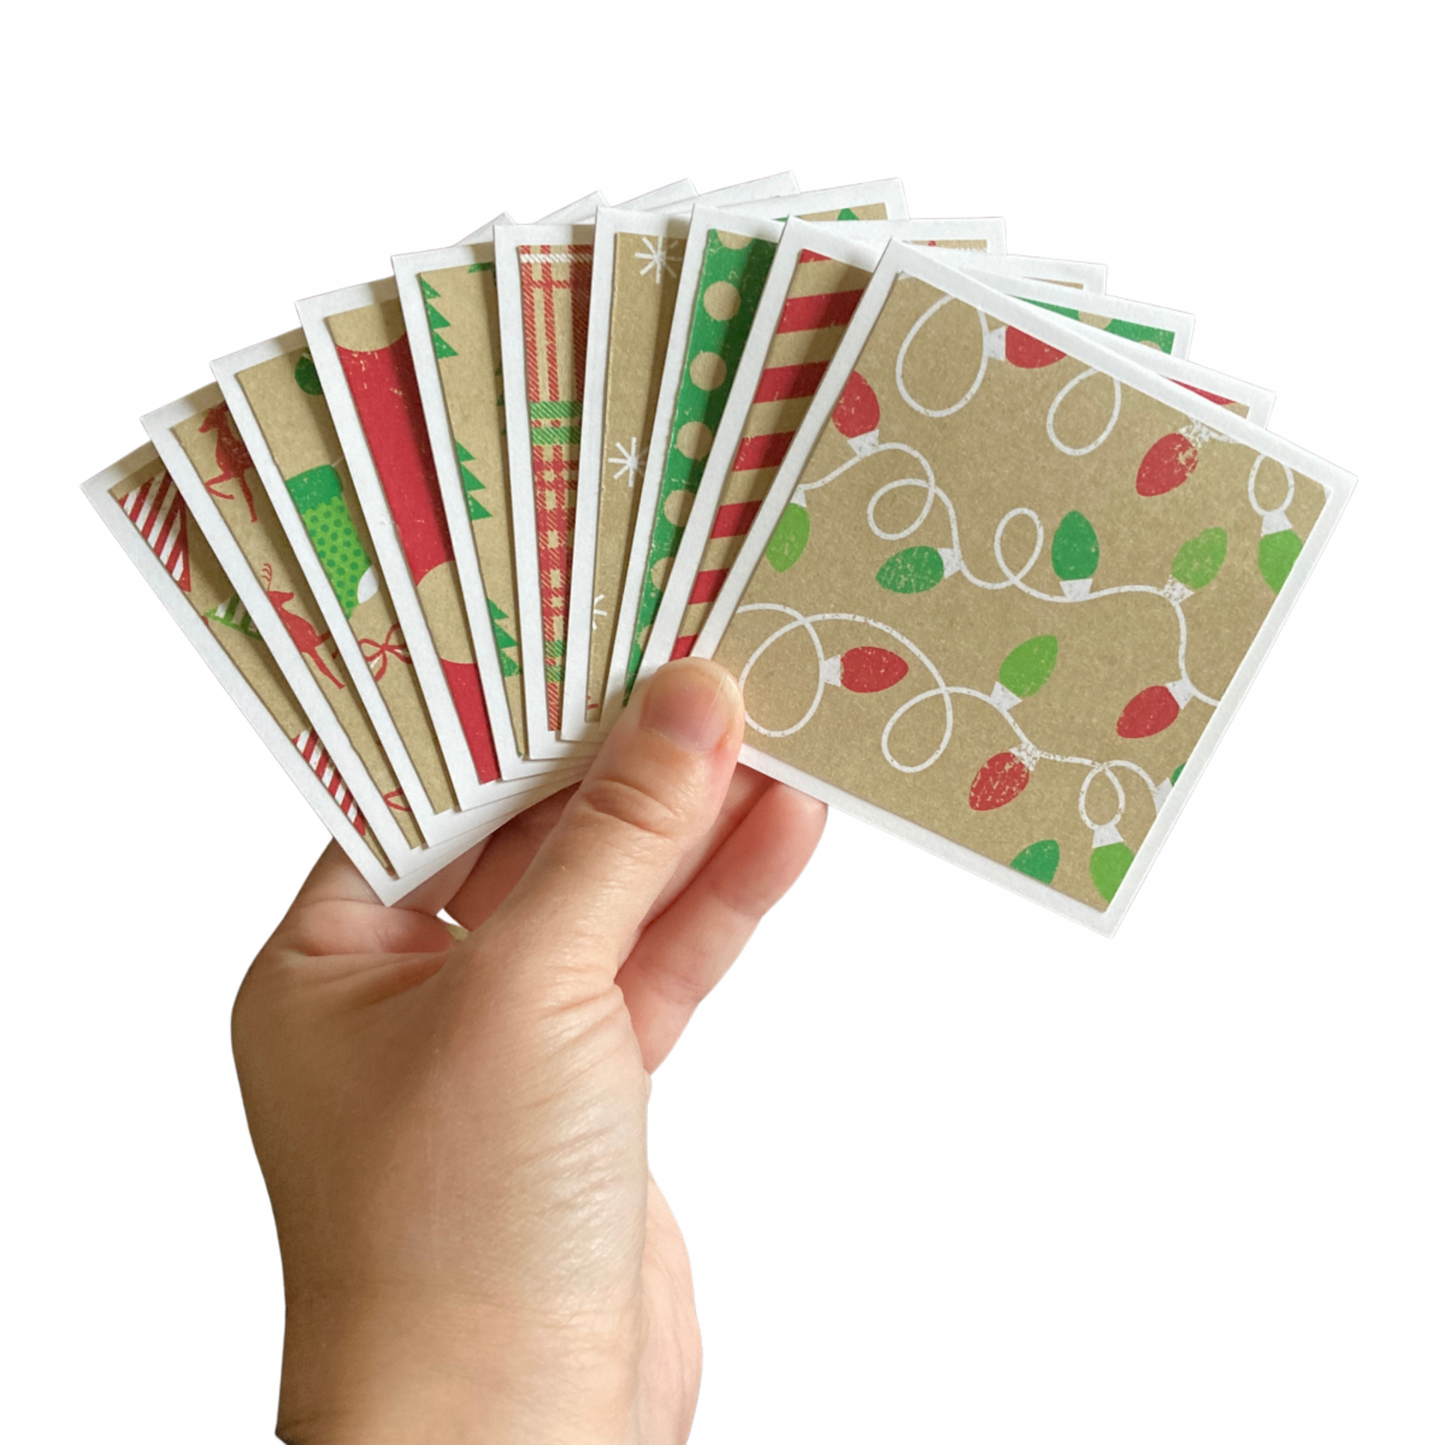 3x3 Kraft Christmas Note Cards